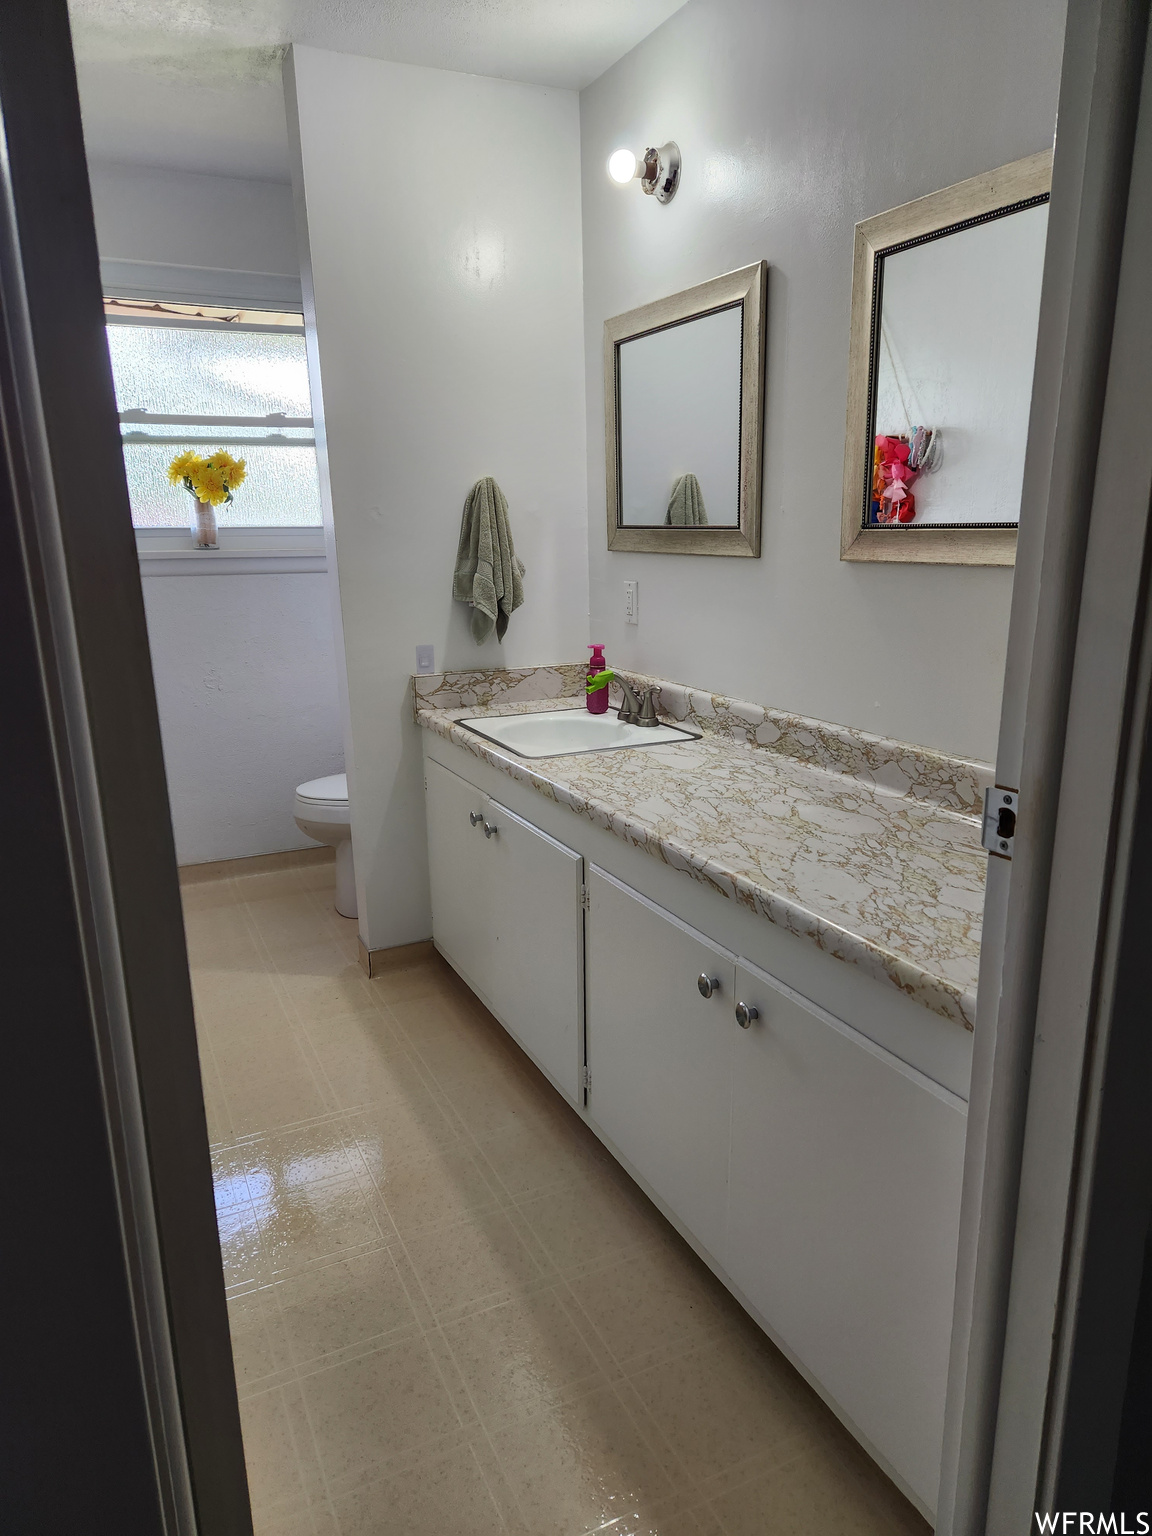 Bathroom featuring large vanity, mirror, and light tile floors